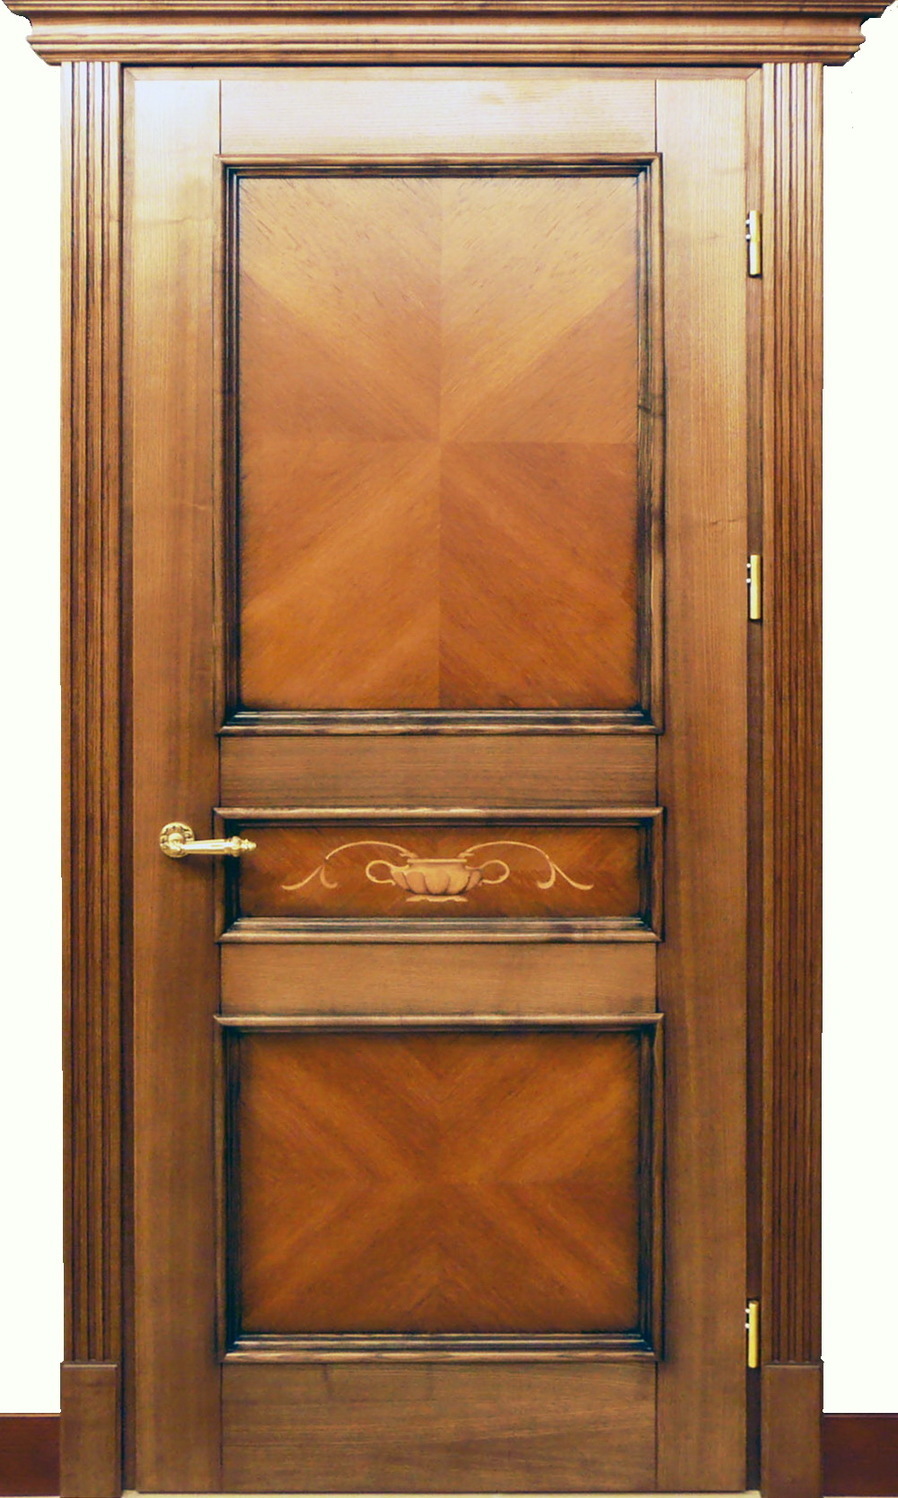 Шпон на филенках двери набран конвертом, модель Снежинка, шпон тикового дерева.